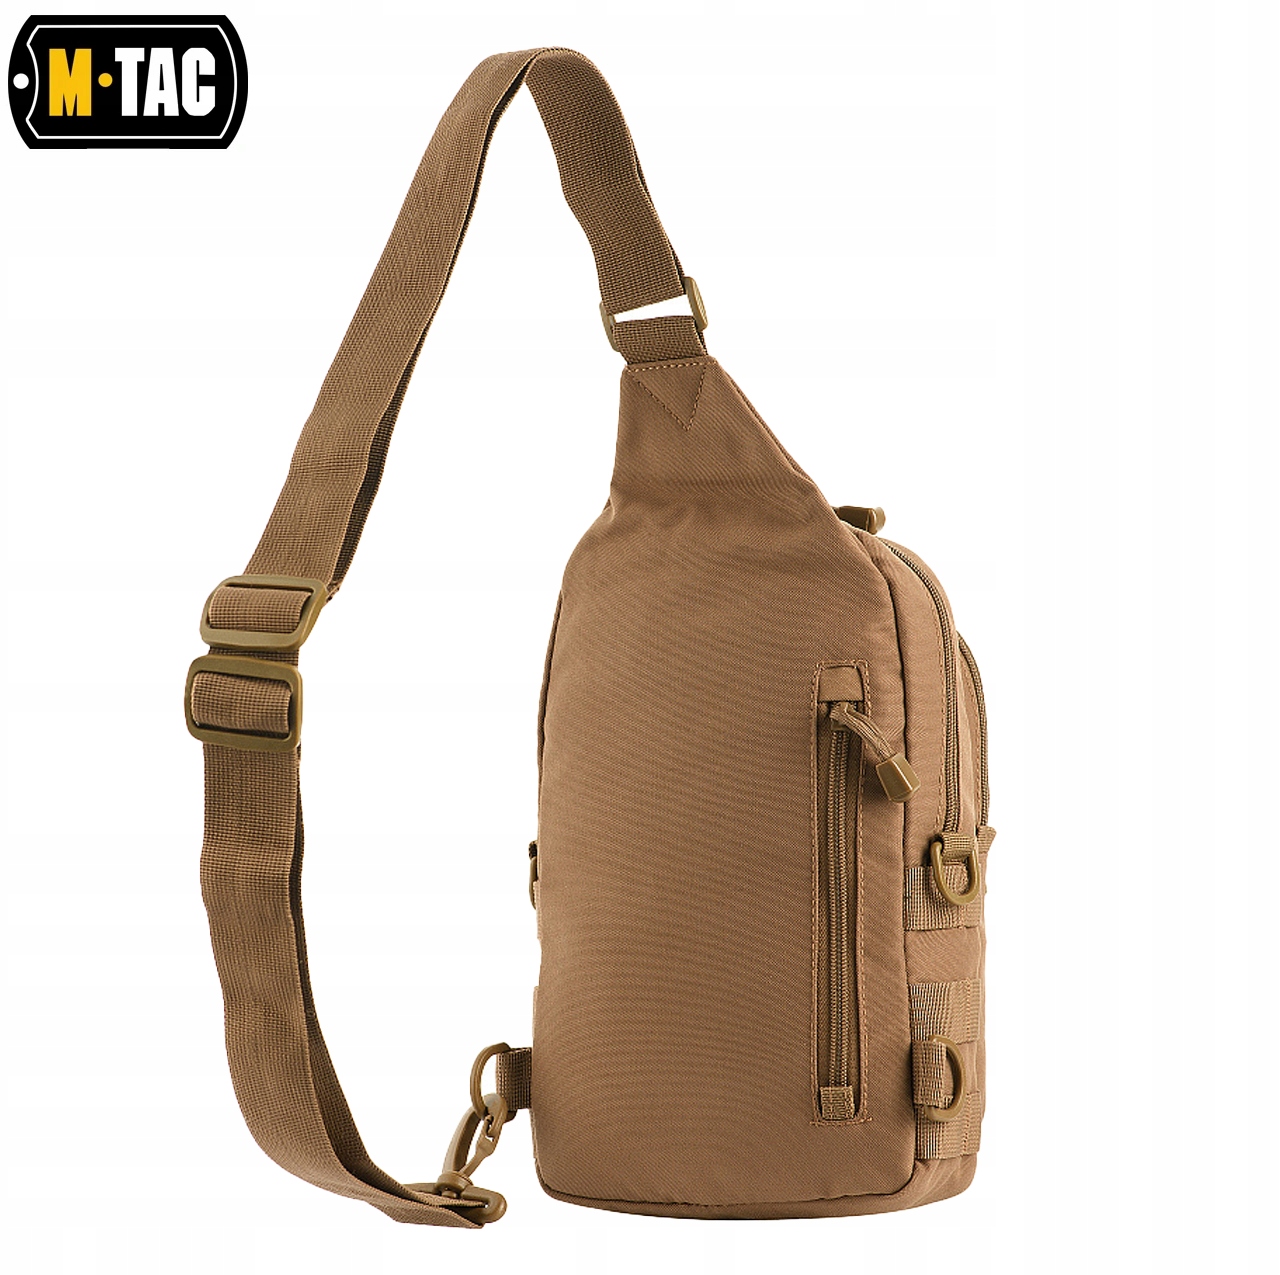 PLECAK TORBA NA JEDNO RAMIĘ SLING PACK ASSISTANT 4L M-TAC COYOTE Model Torba Assistant Bag